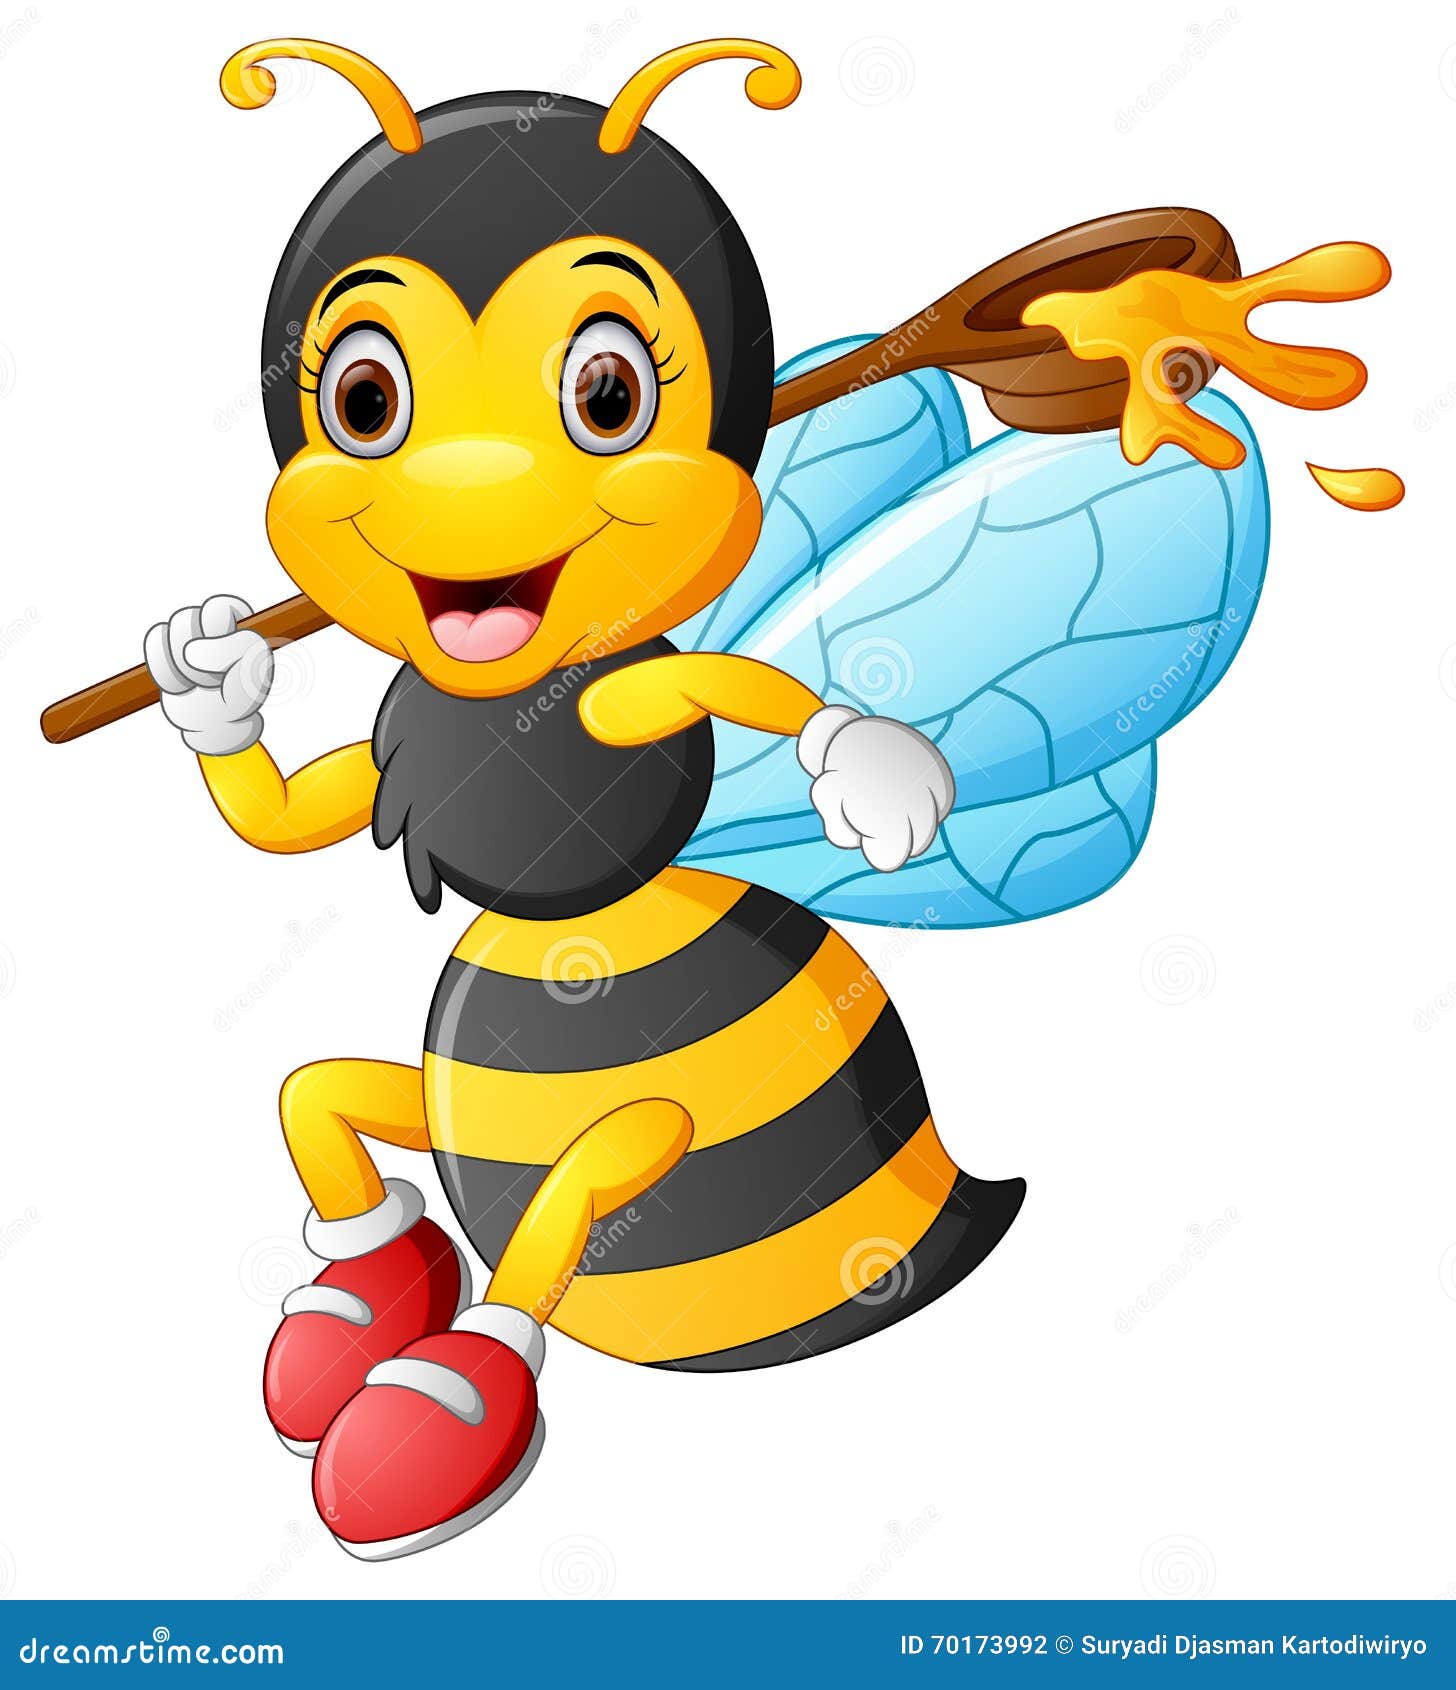 https://thumbs.dreamstime.com/z/cartoon-bee-holding-scoop-honey-illustration-70173992.jpg